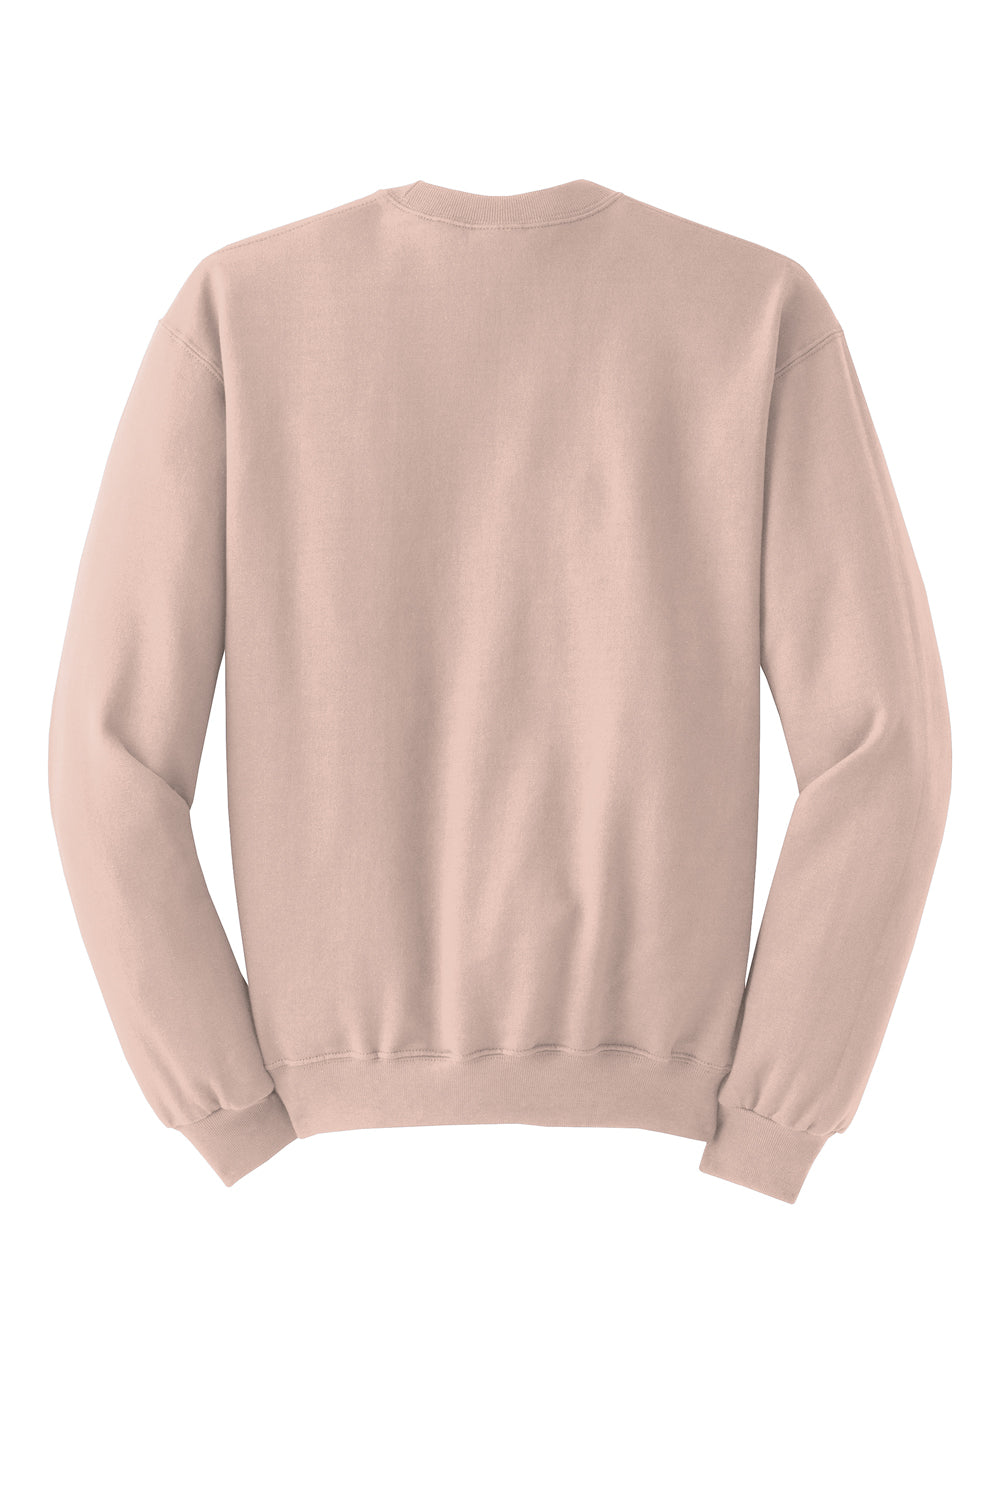 Jerzees Mens NuBlend Fleece Crewneck Sweatshirt Blush Pink Flat Back